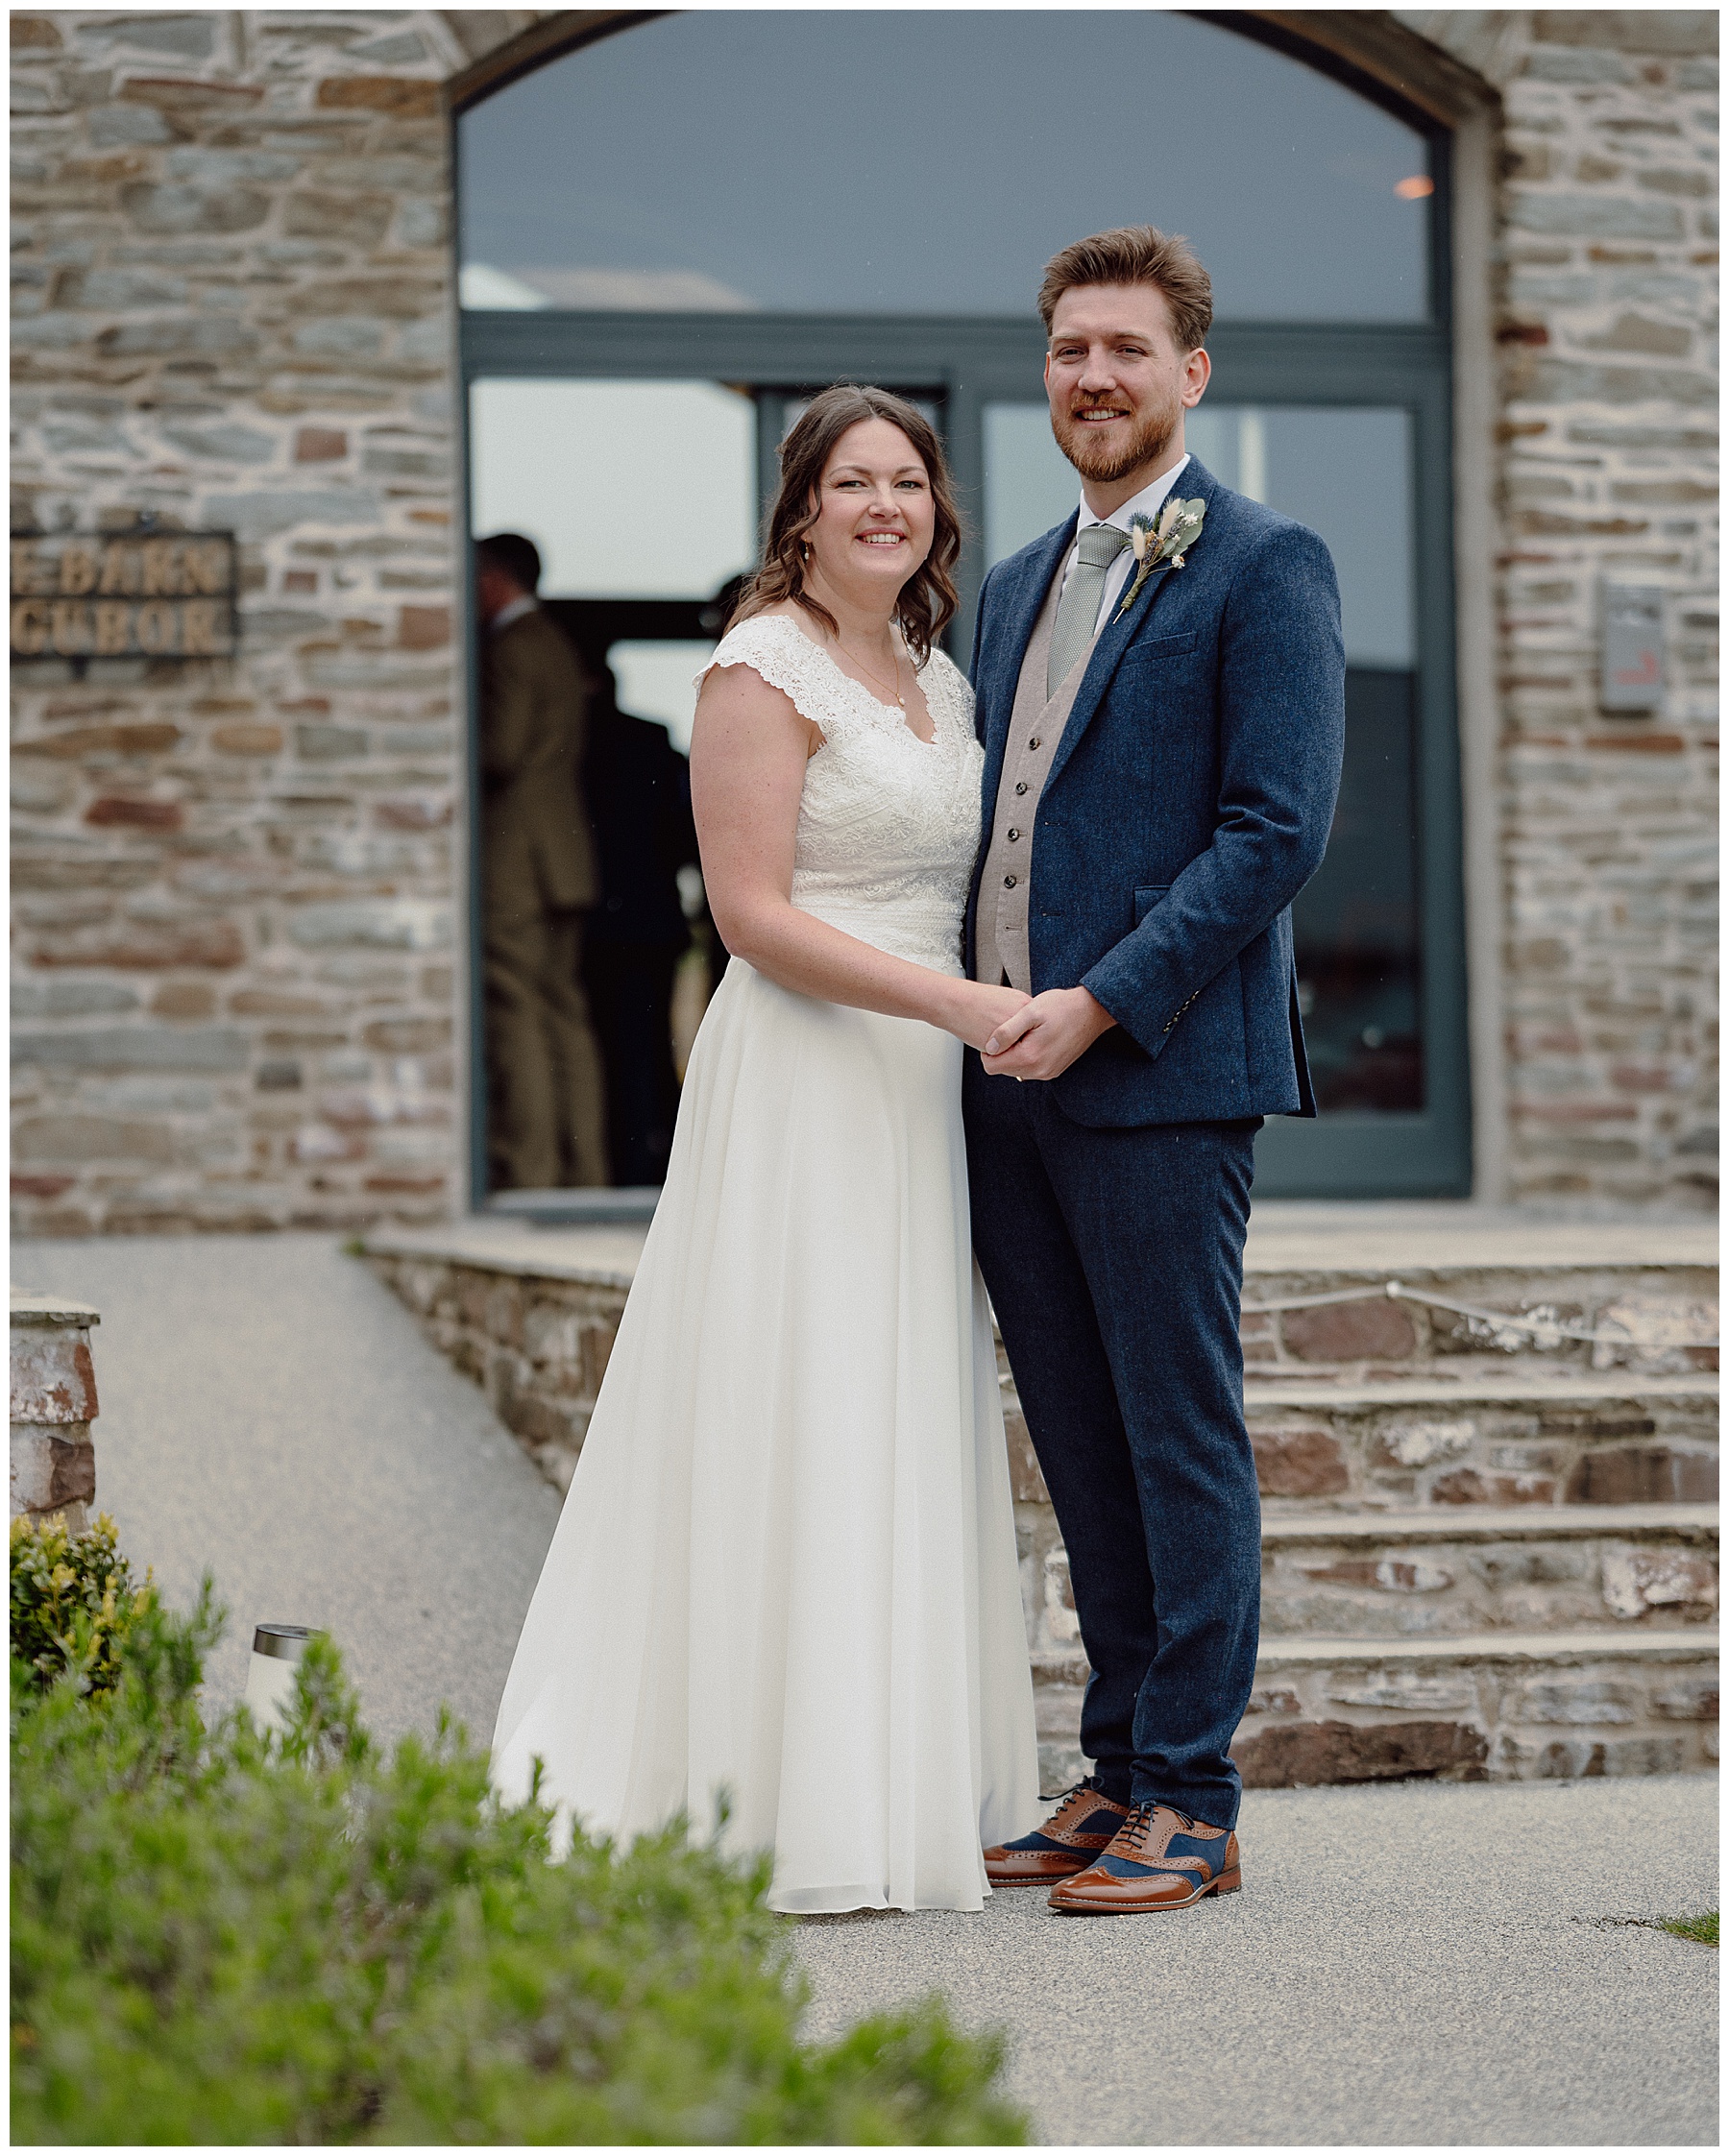 Courtyard Wales Wedding Photos with Bride & Groom